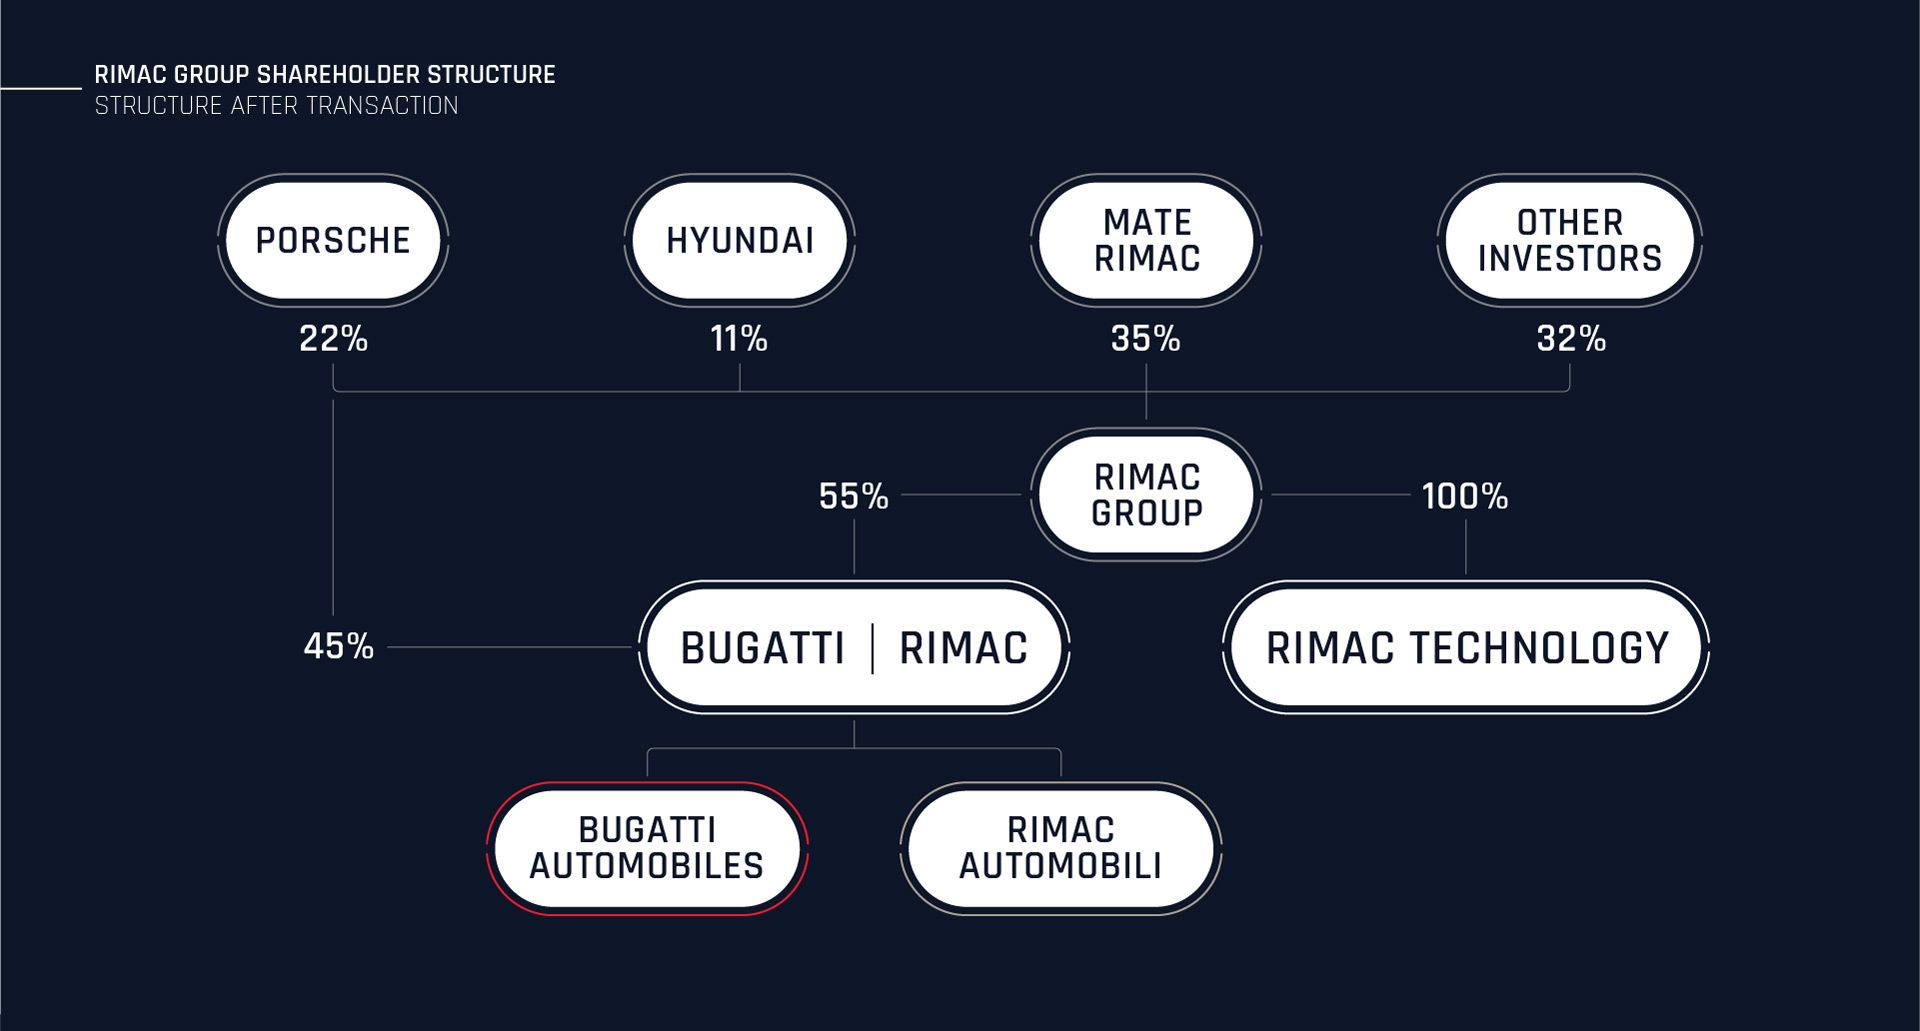 Rimac Group shareholder structure